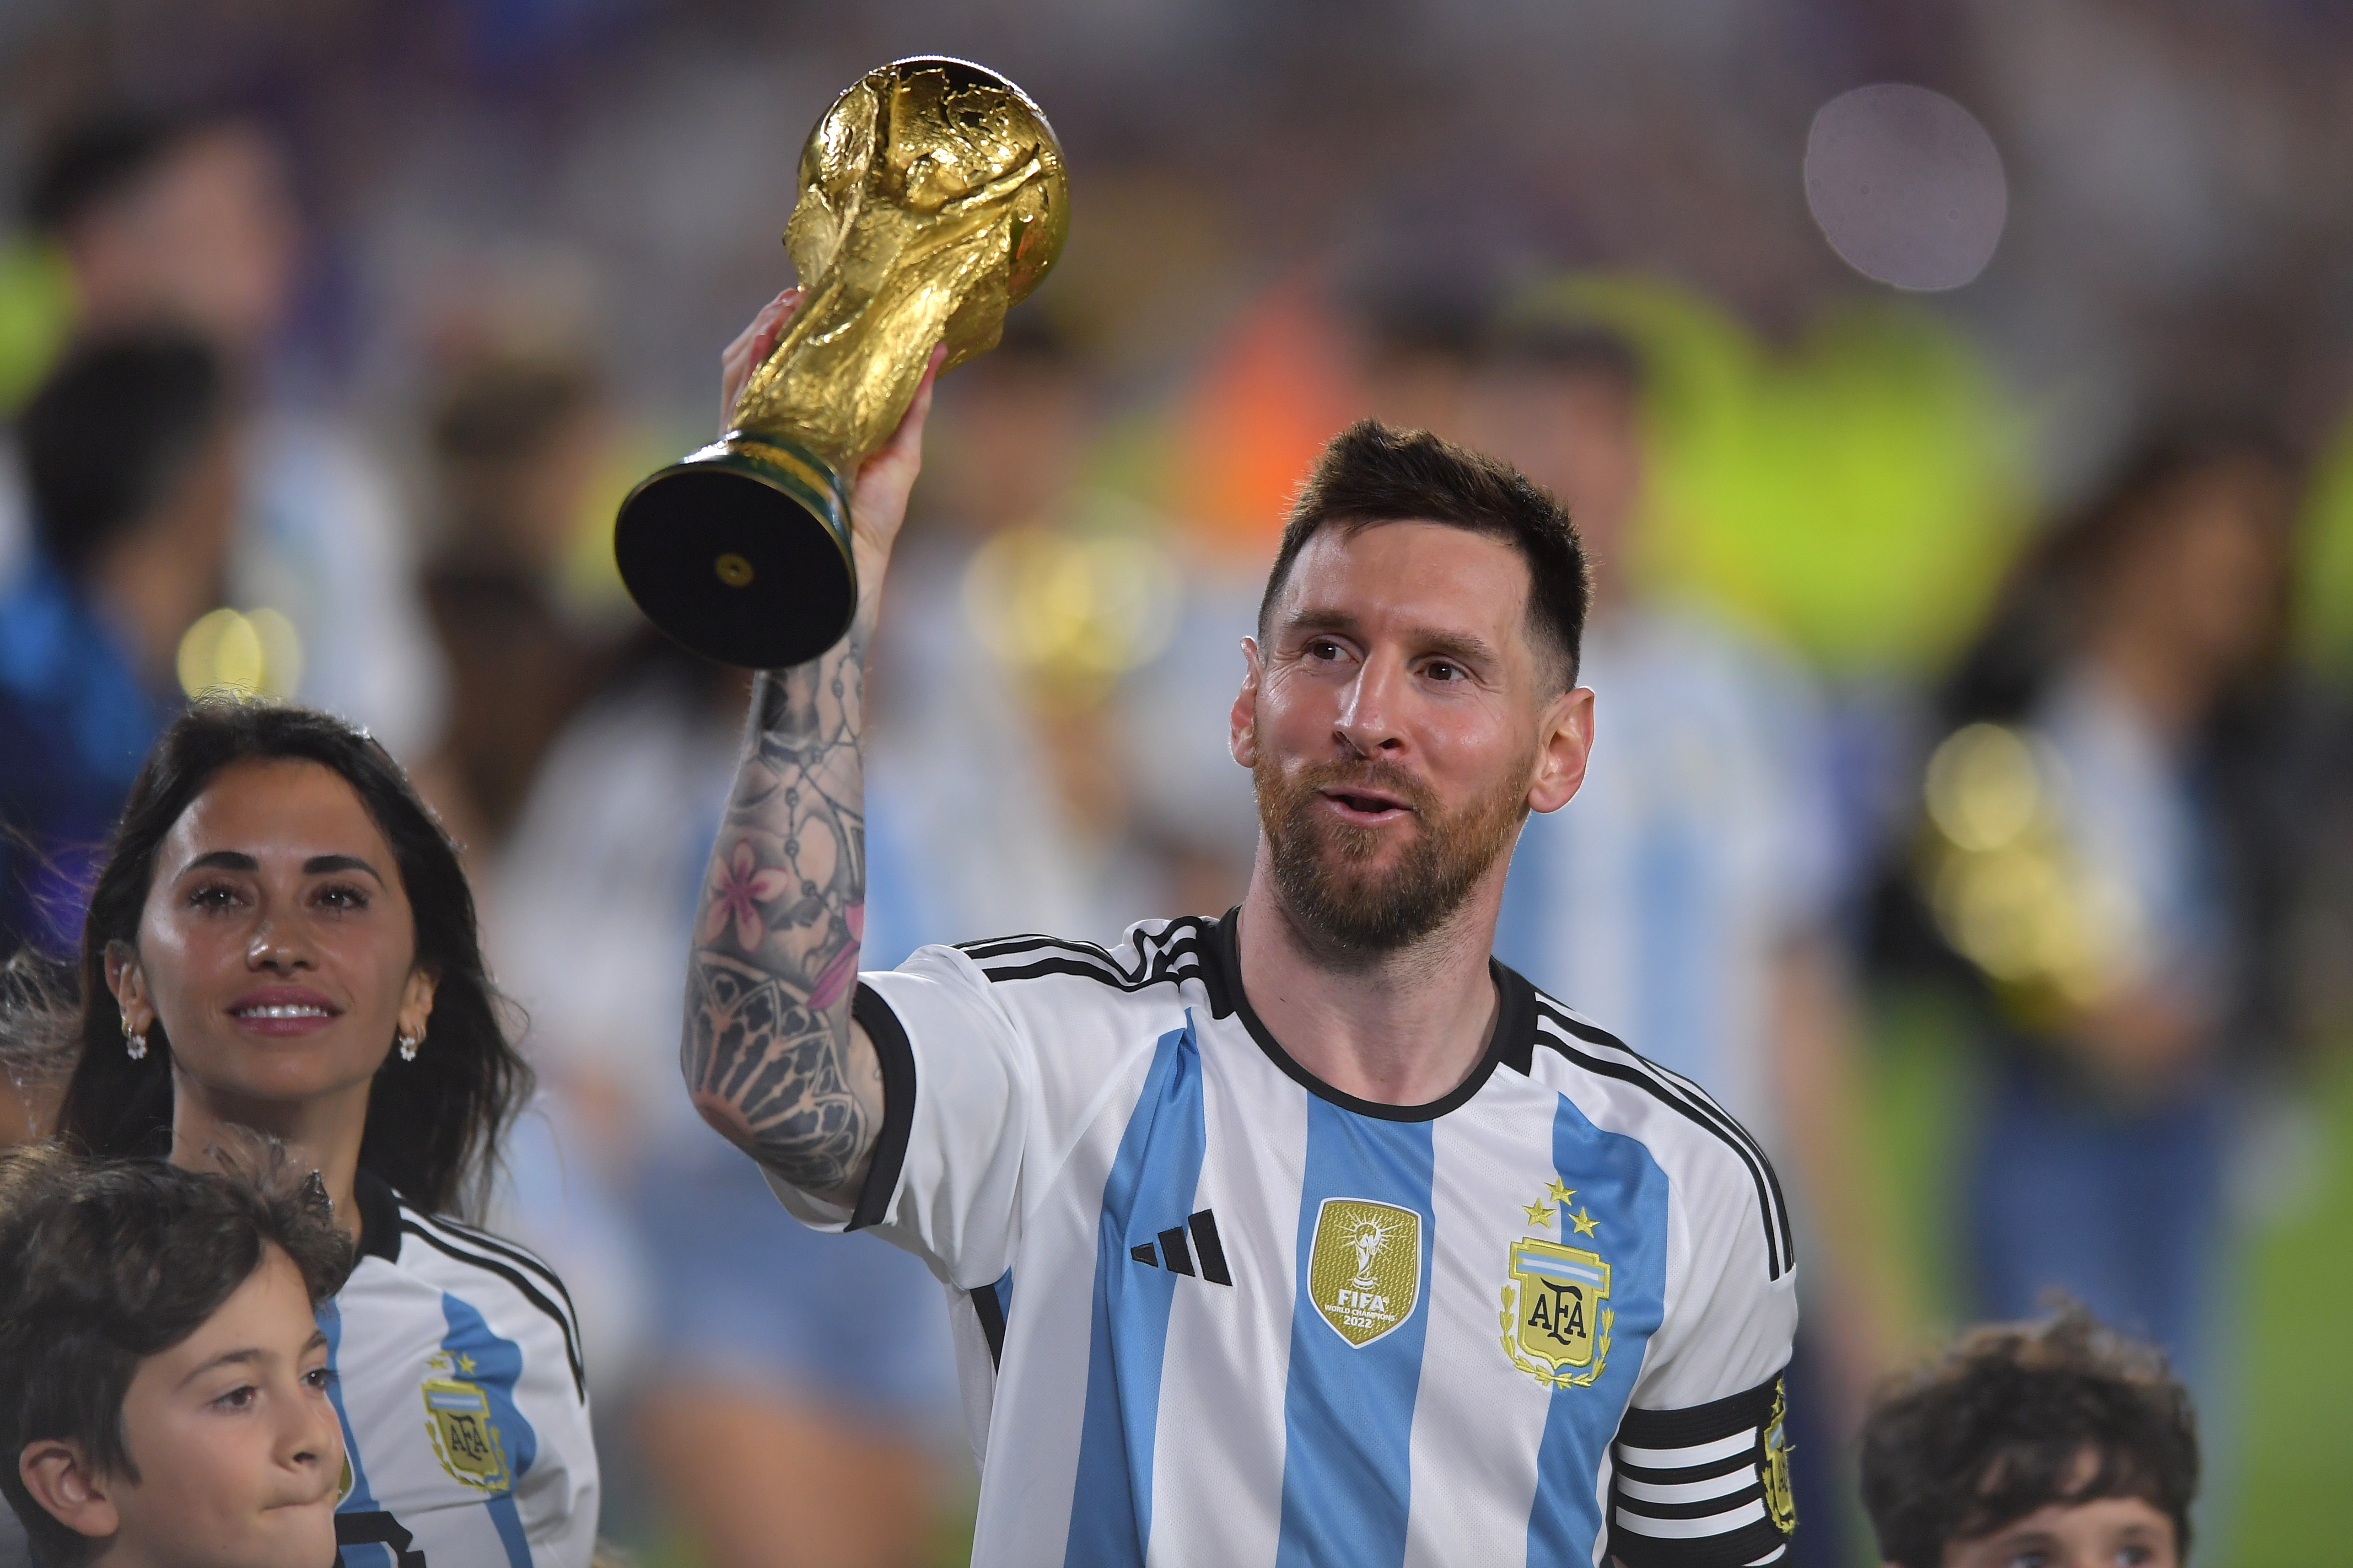 La camiseta de Louis Vuitton de Leo Messi que ha revolucionado